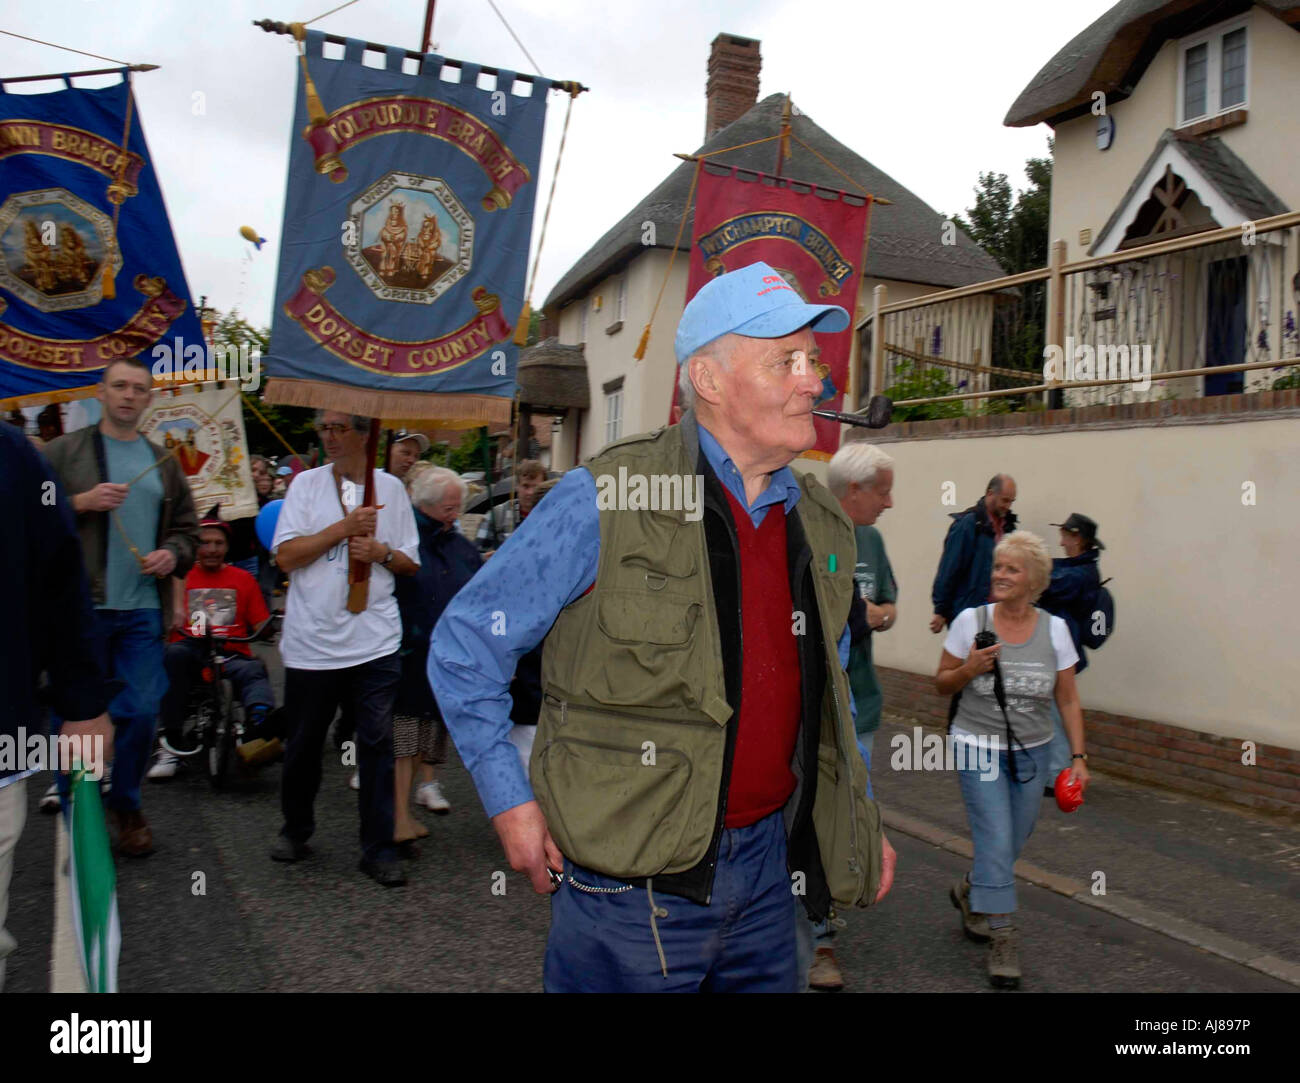 Tony Benn MP at the Tolpuddle Martyrs Trade Union Rally, Dorset, Britain, UK Stock Photo